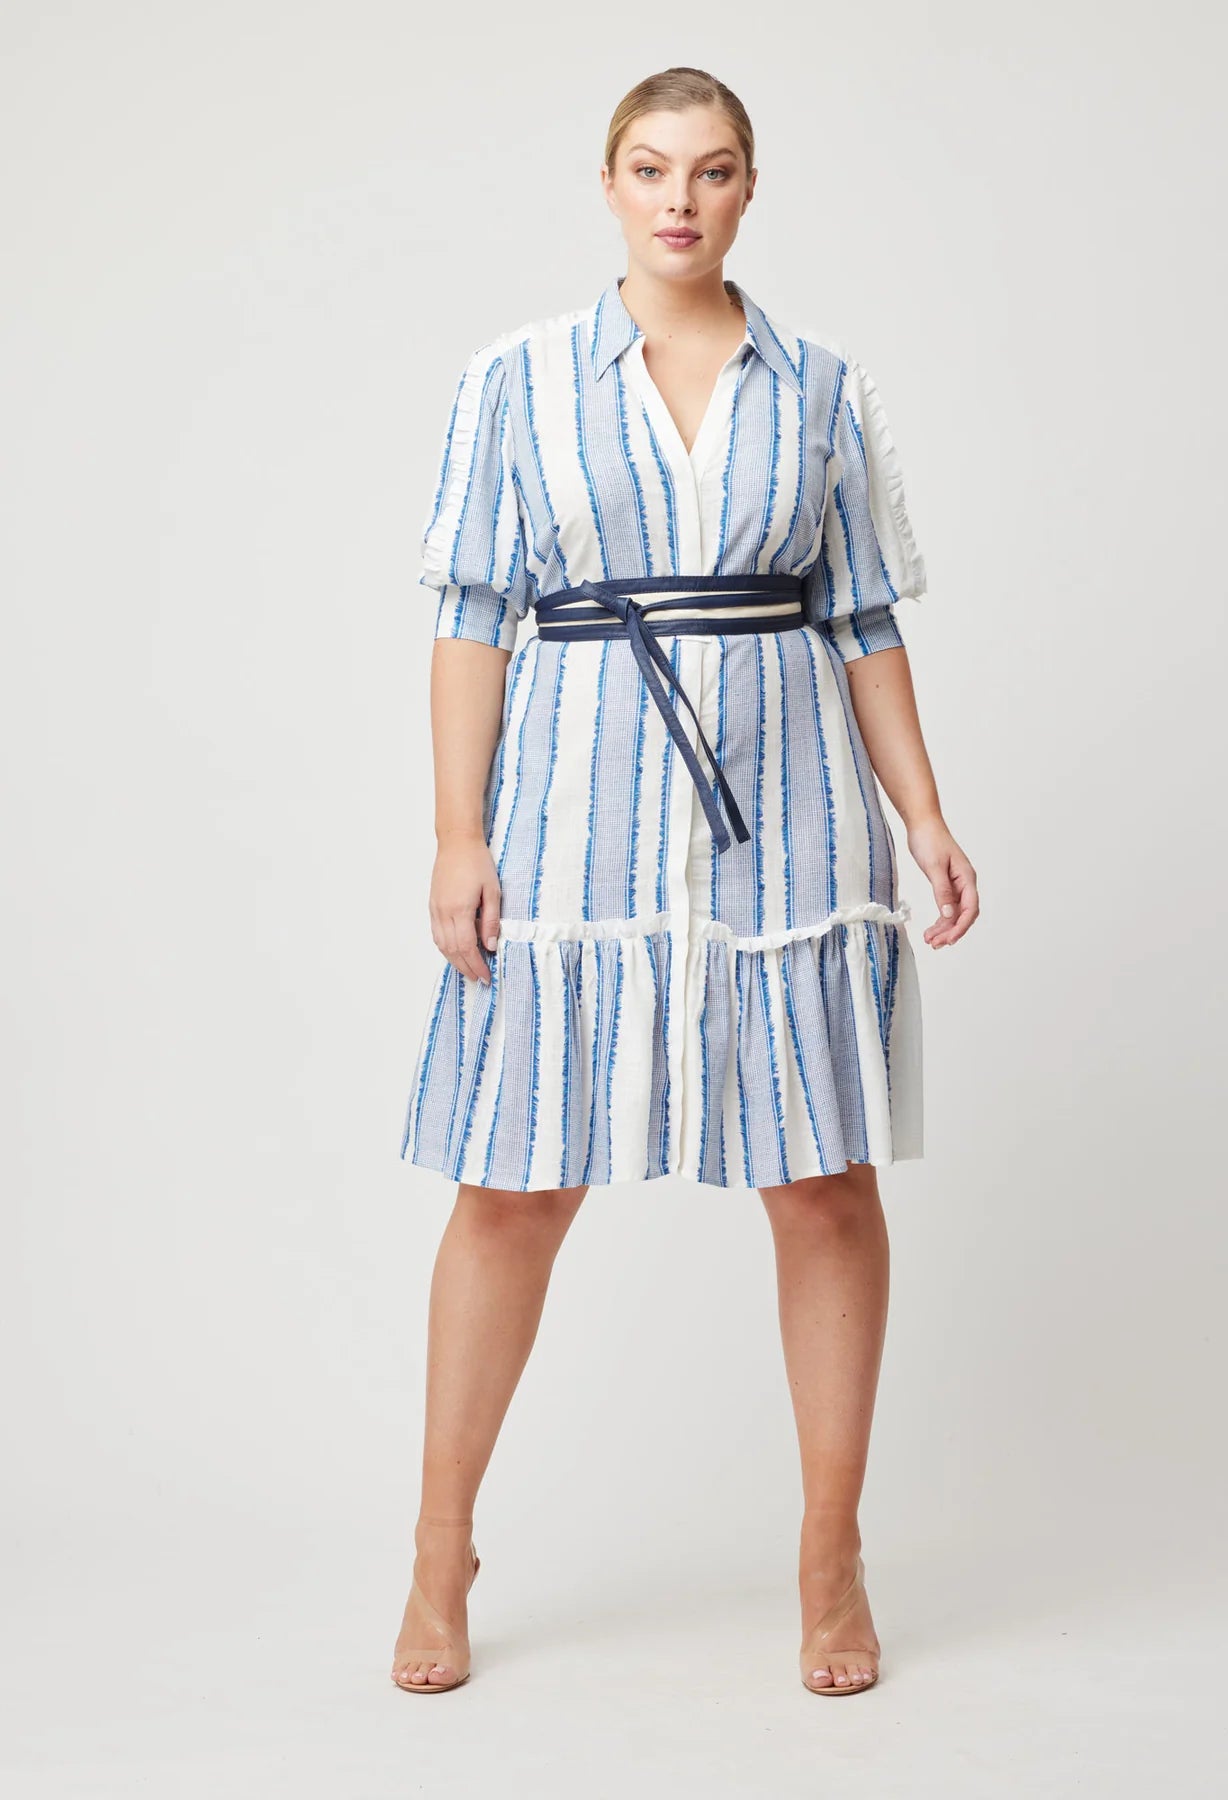 ONCE WAS - Nerano Linen Viscose Dress in Sorrento Stripe